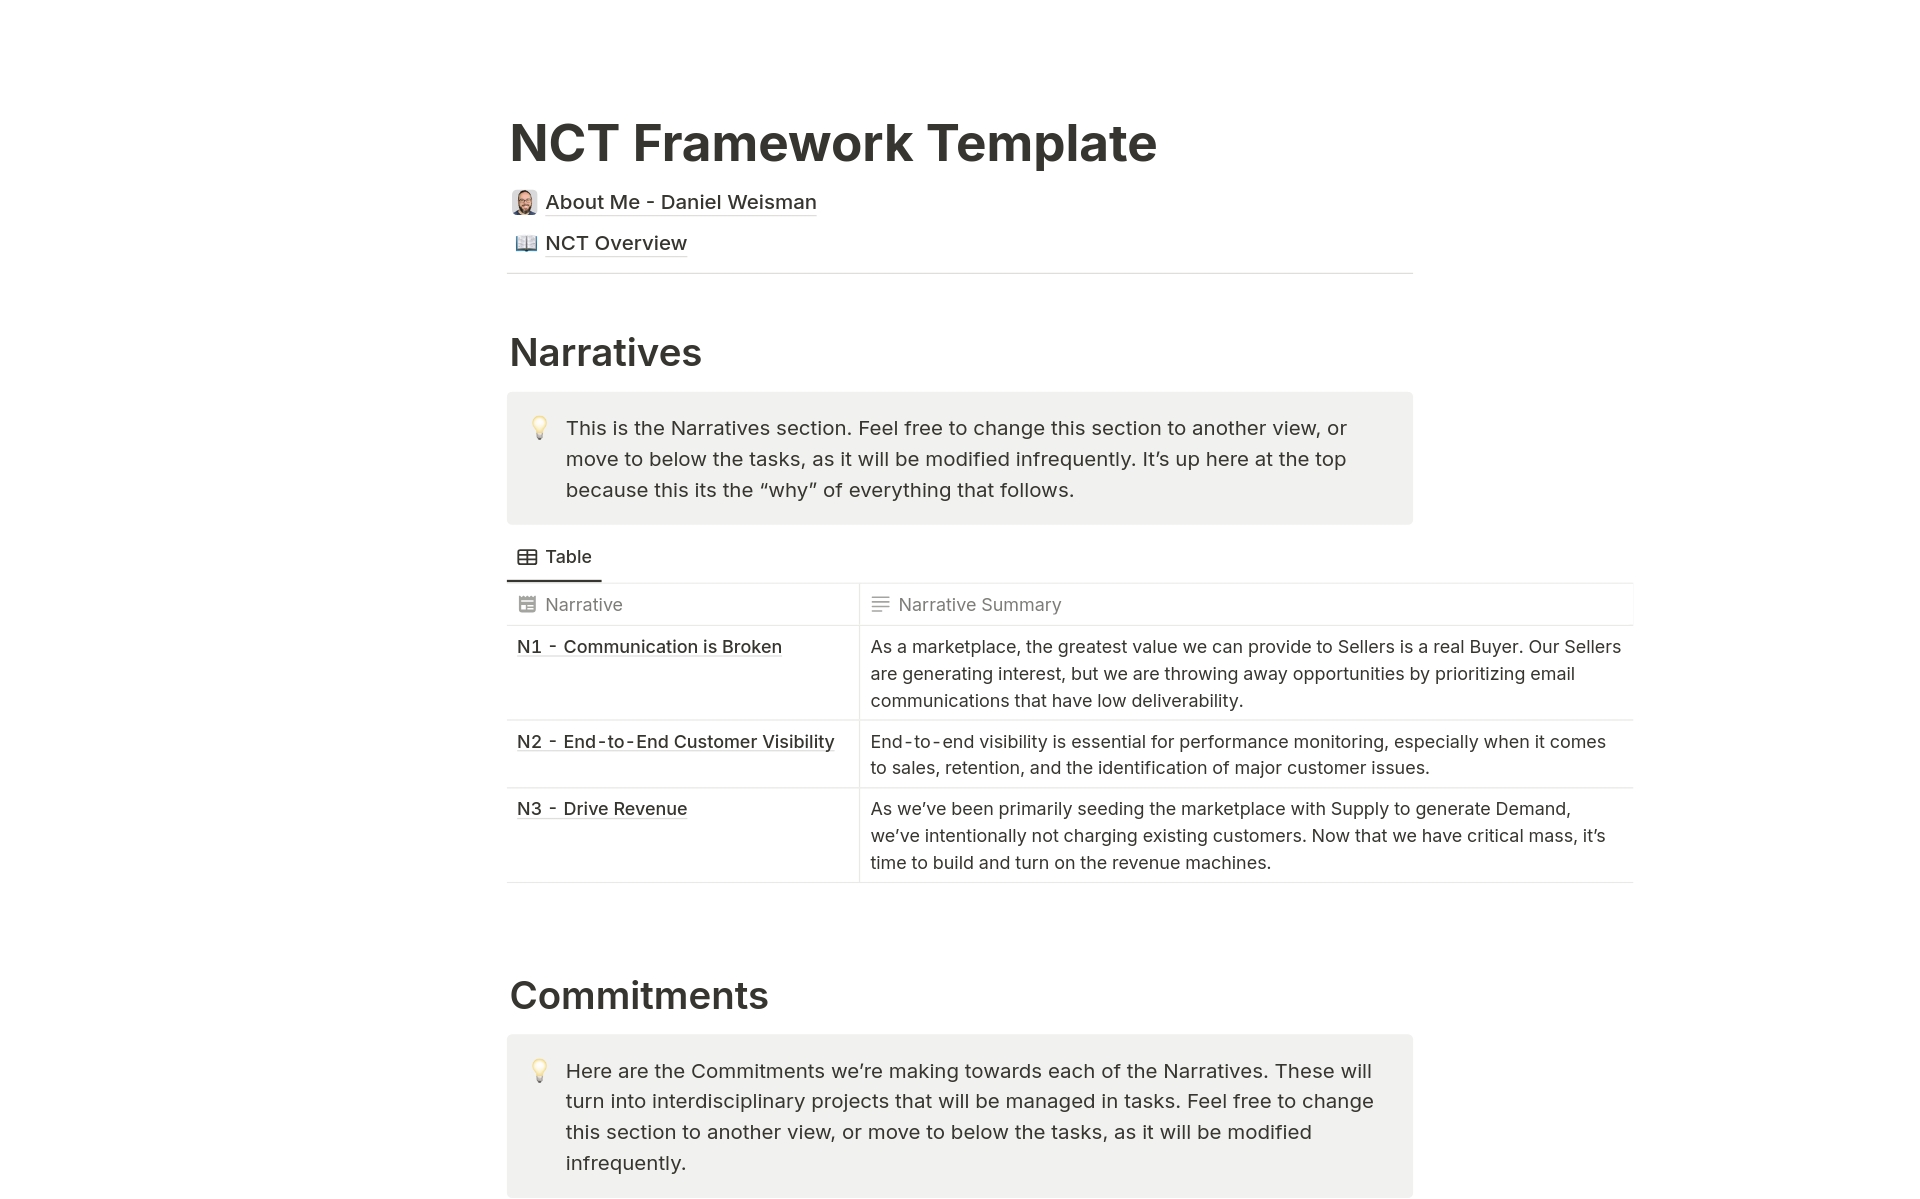 Aperçu du modèle de NCT Framework